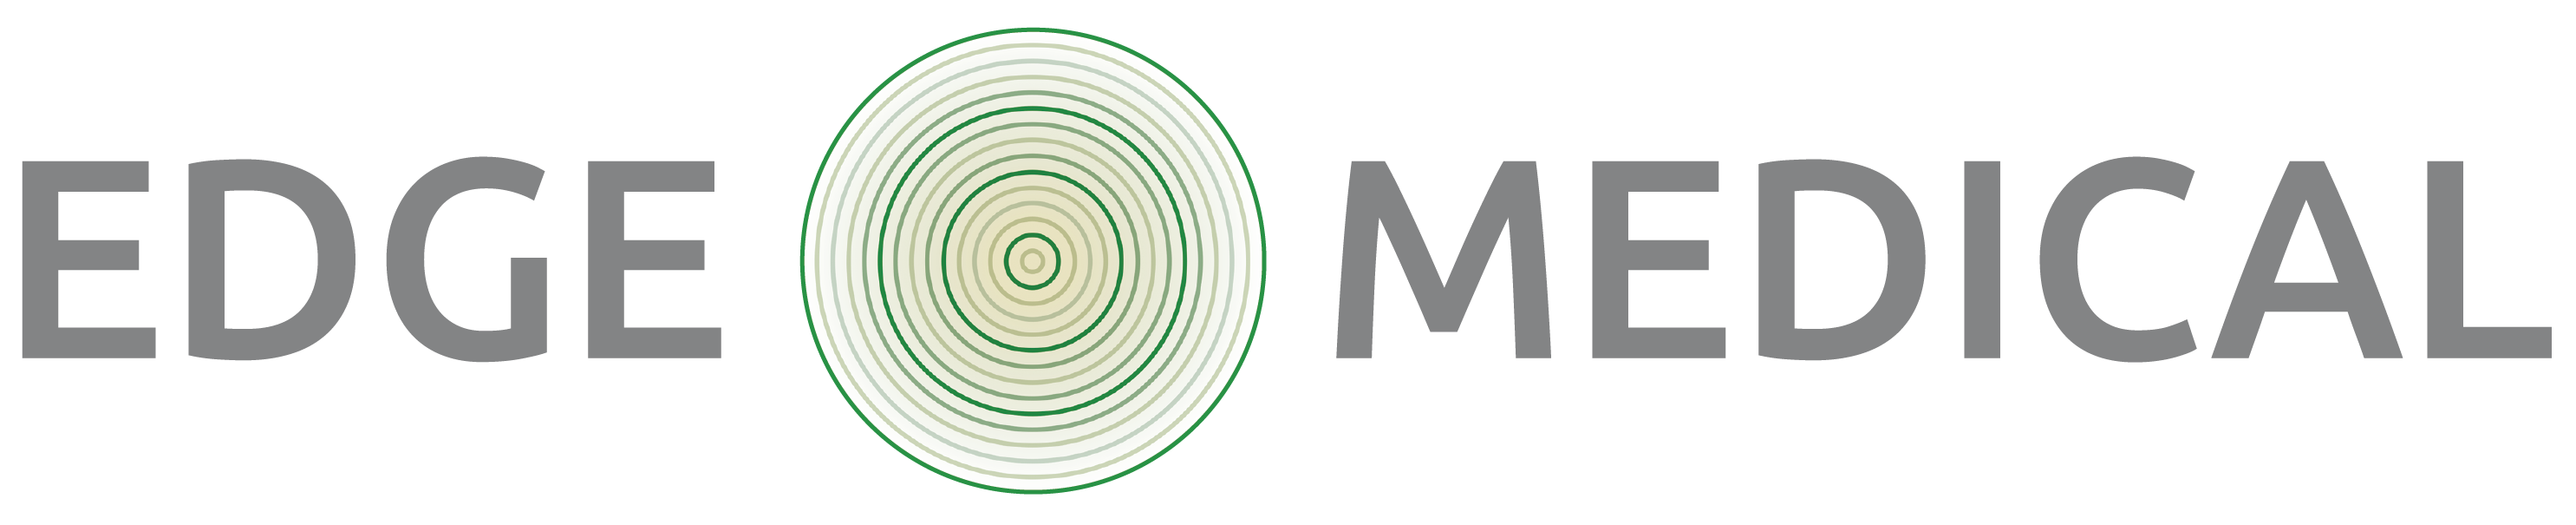 Edge Medical logo